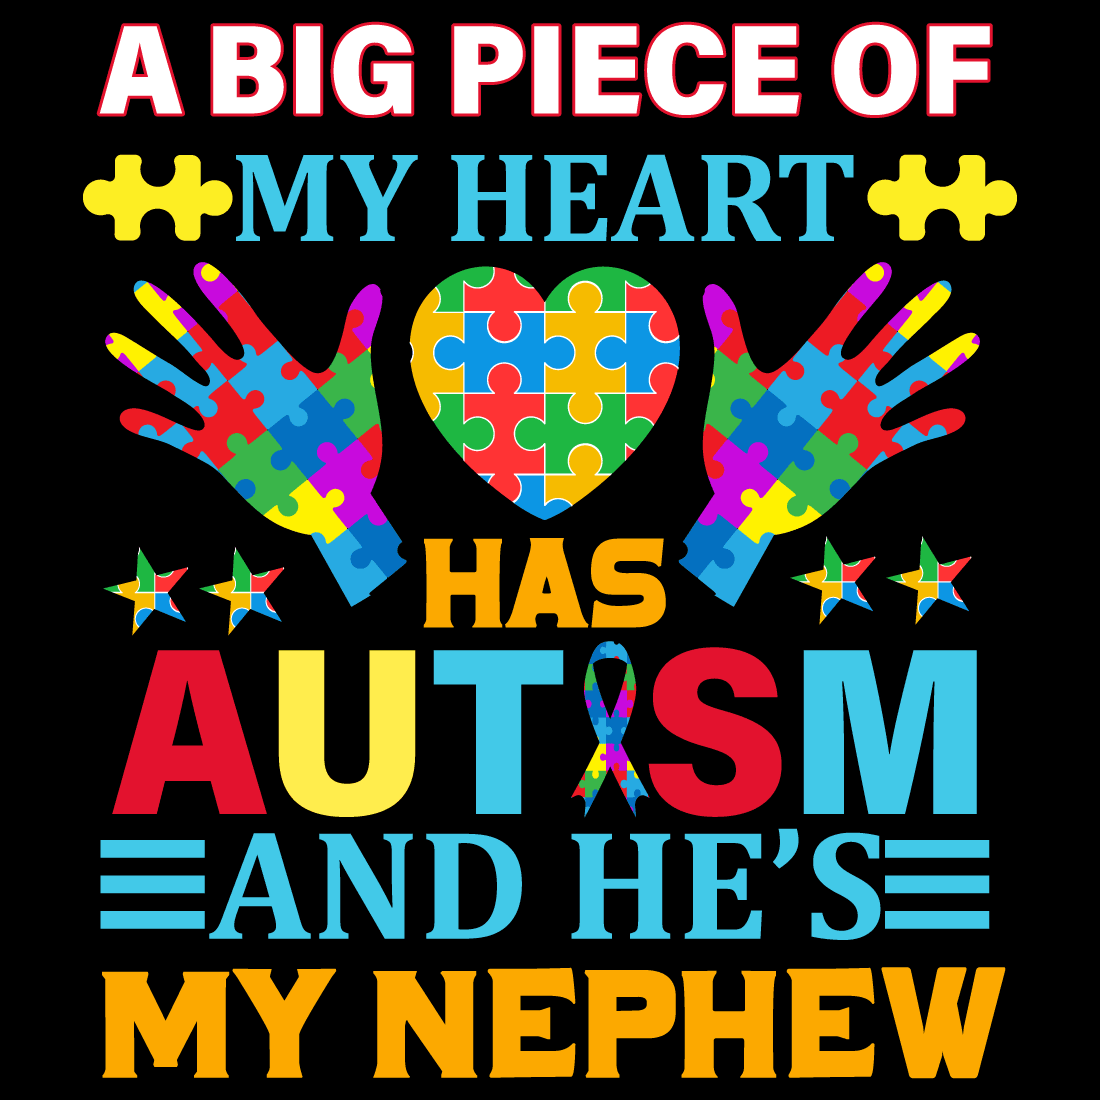 Big piece of my heart has autism and he's my nephew.